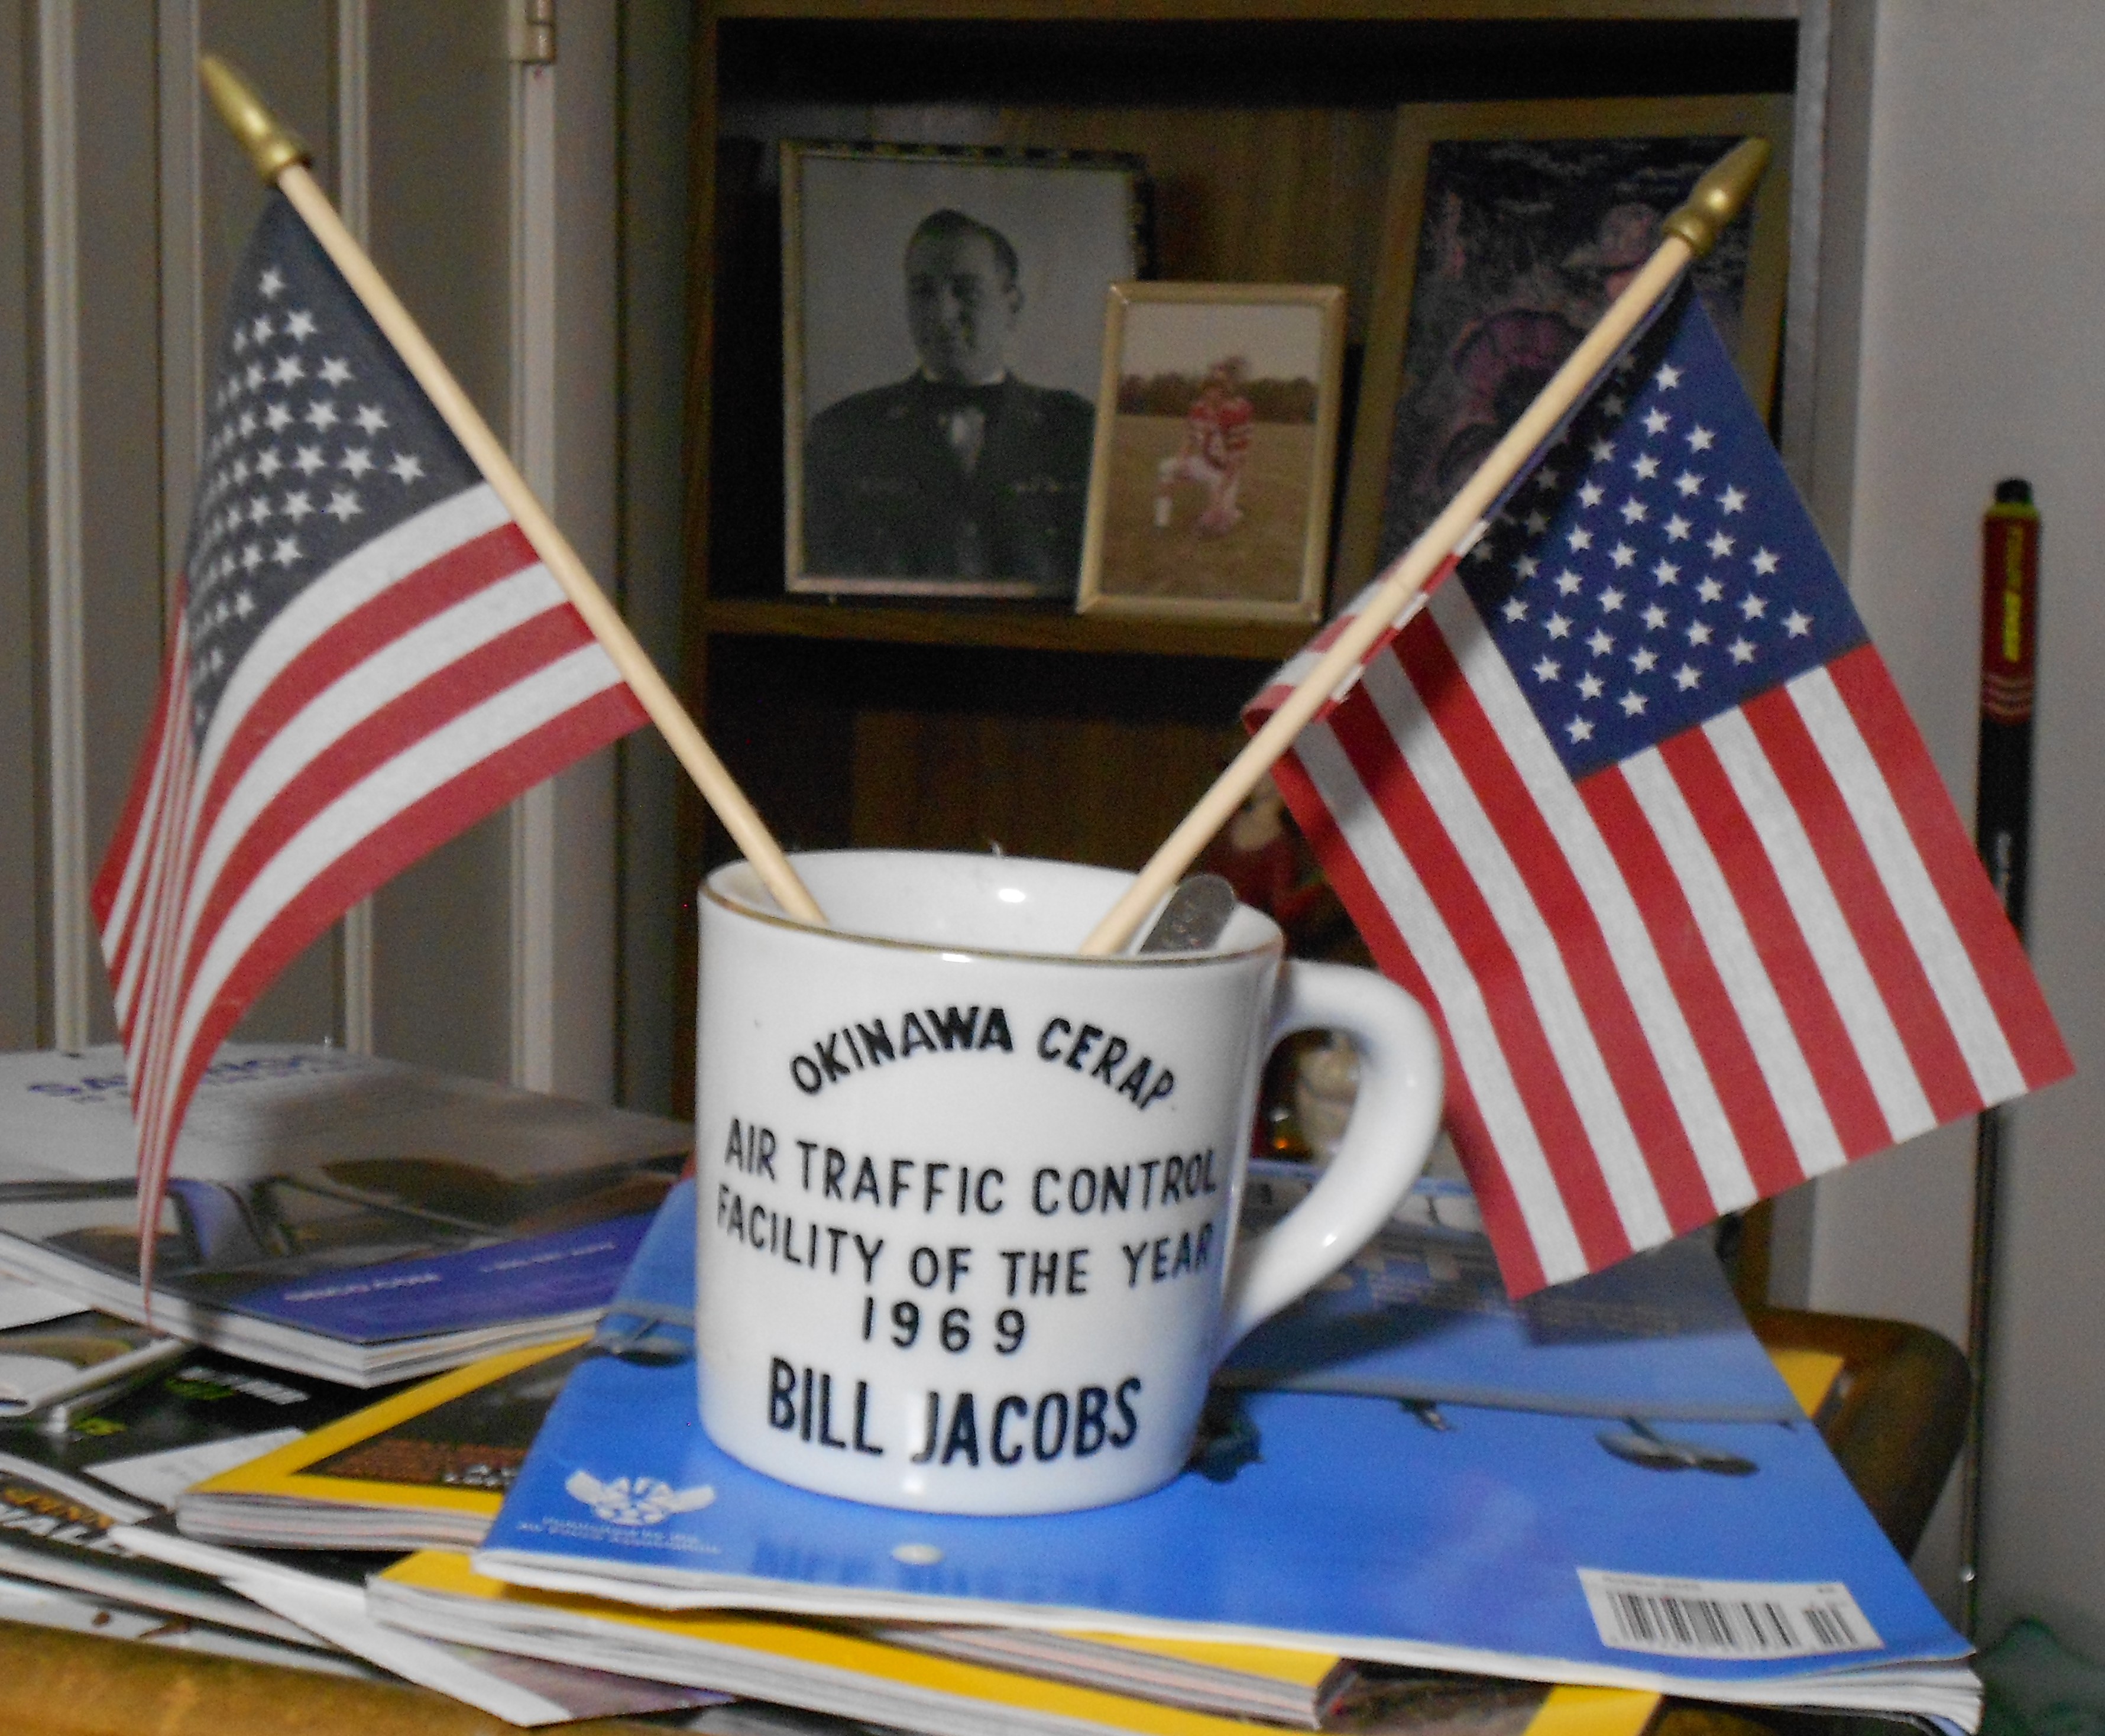 American flags in a coffee mug